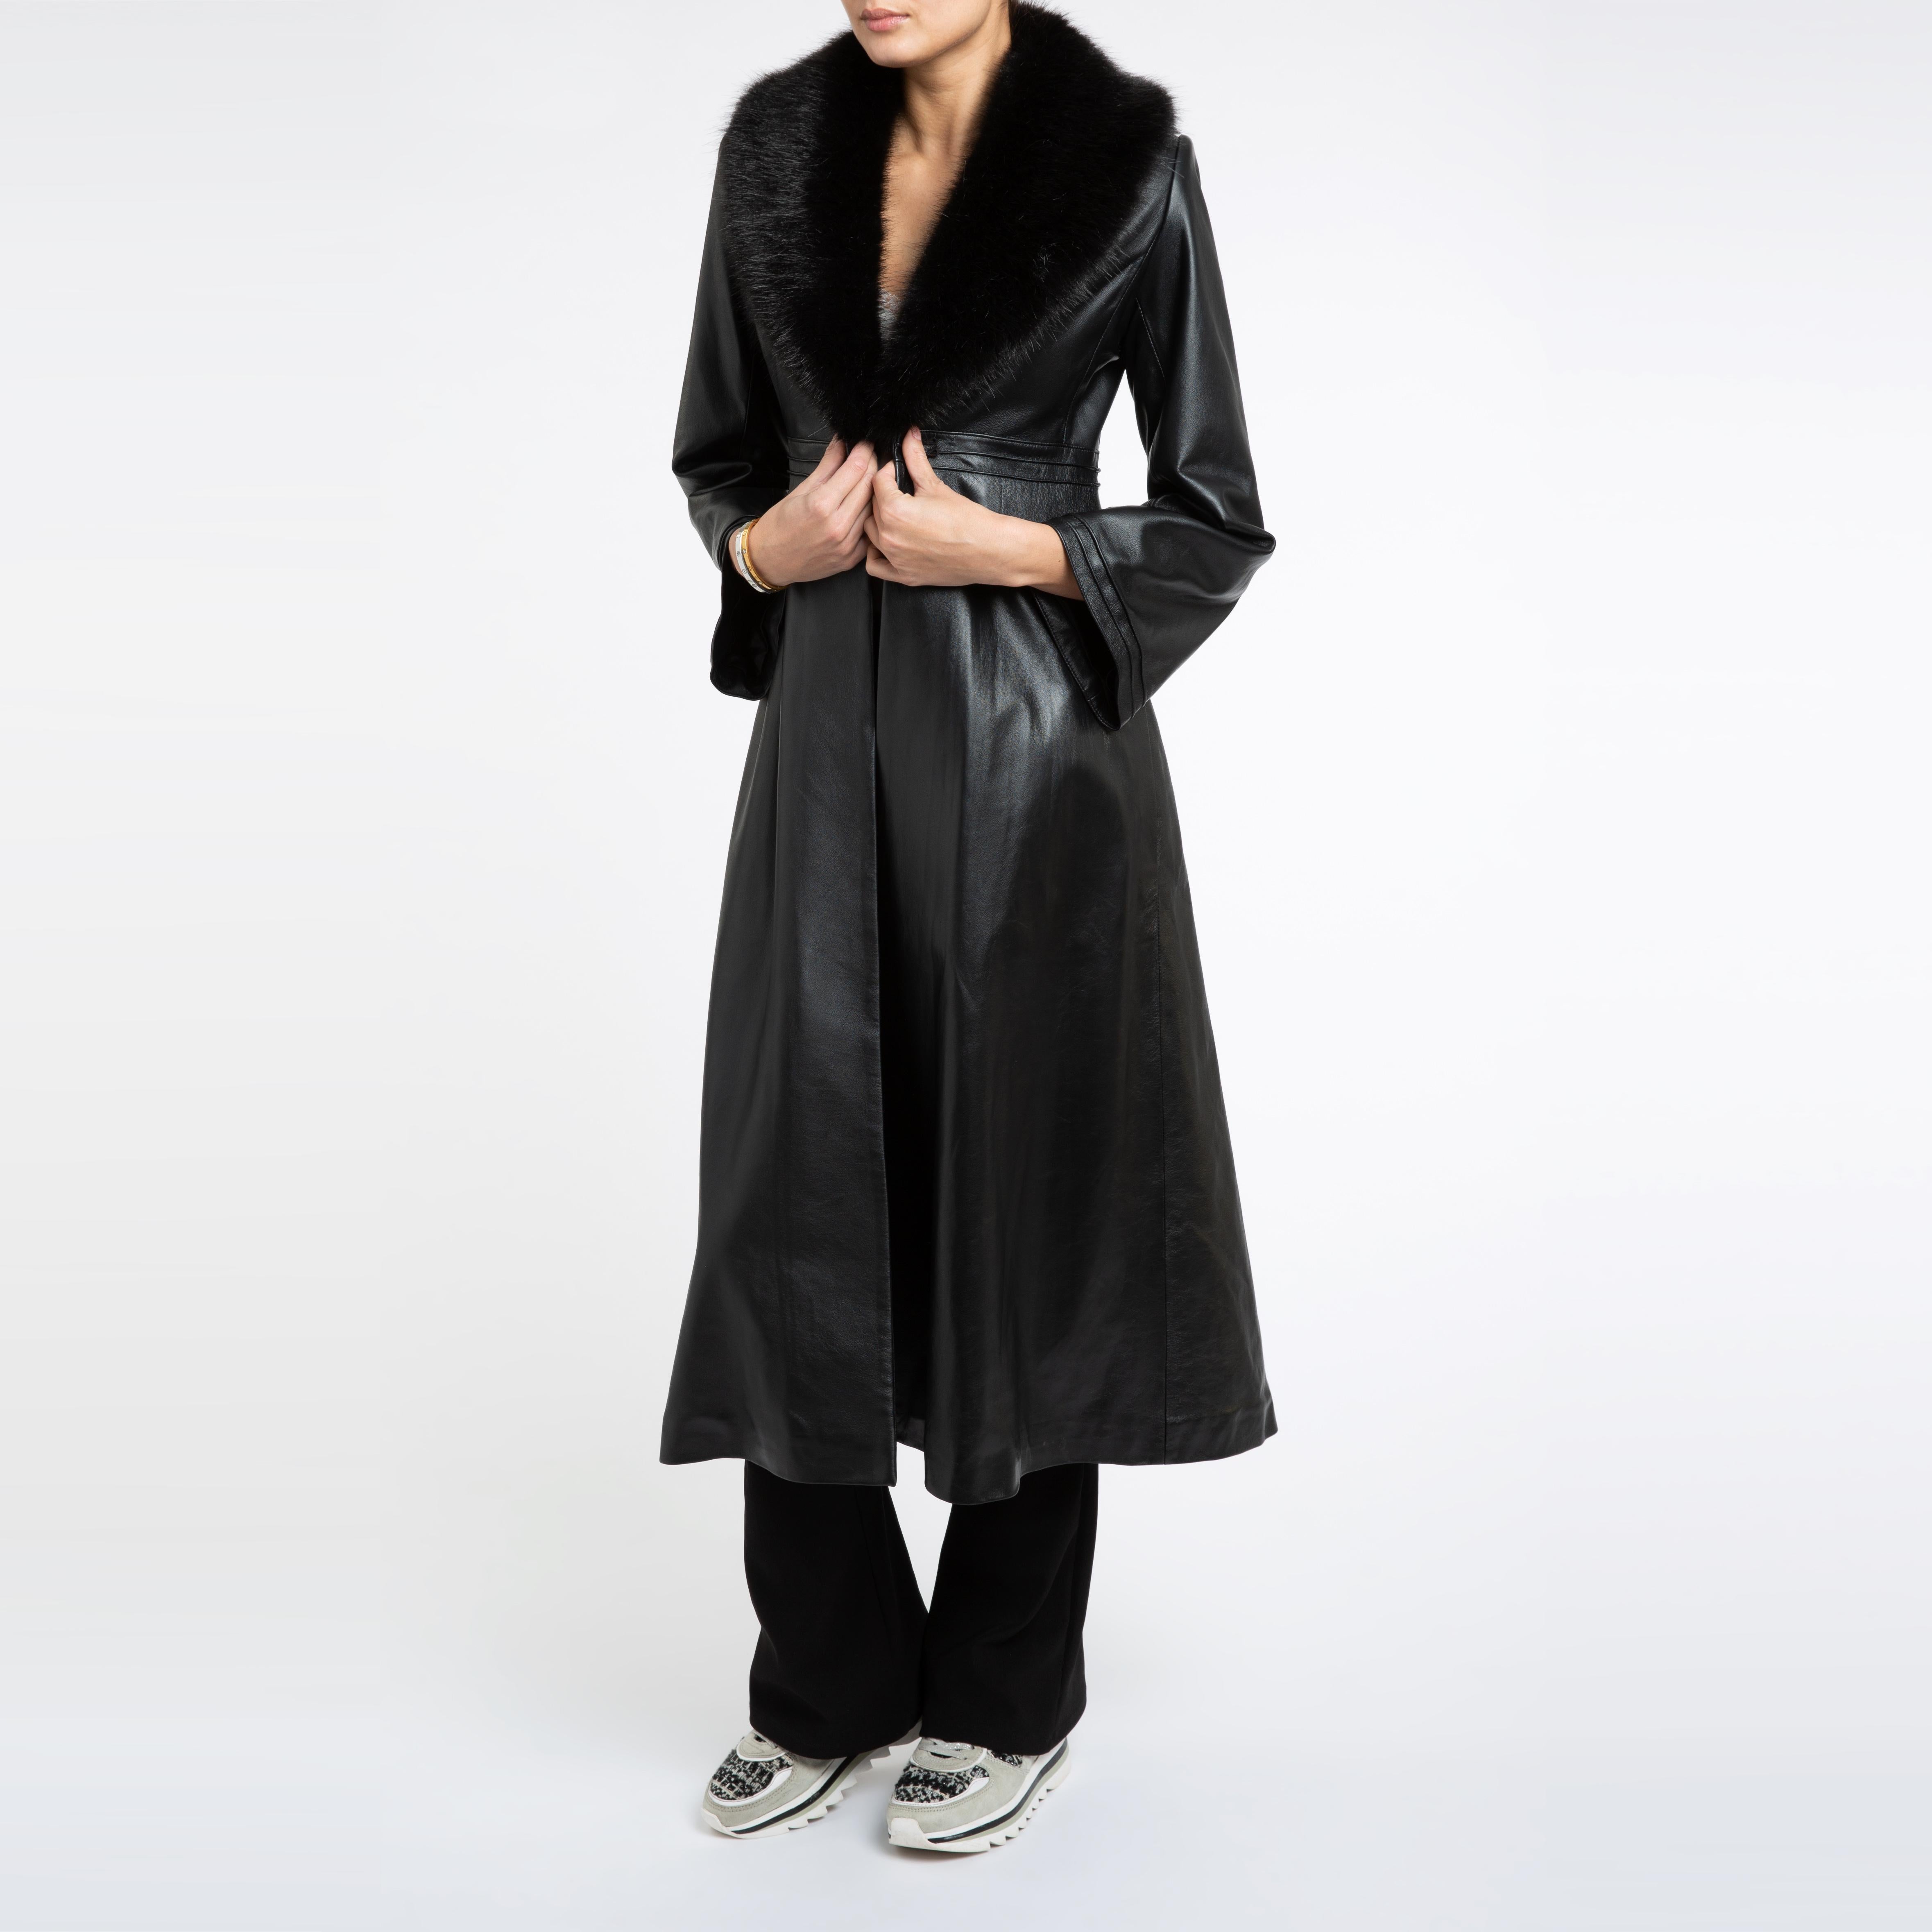 Women's Verheyen London Edward Leather Coat with Faux Fur Collar in Black - Size uk 16 For Sale